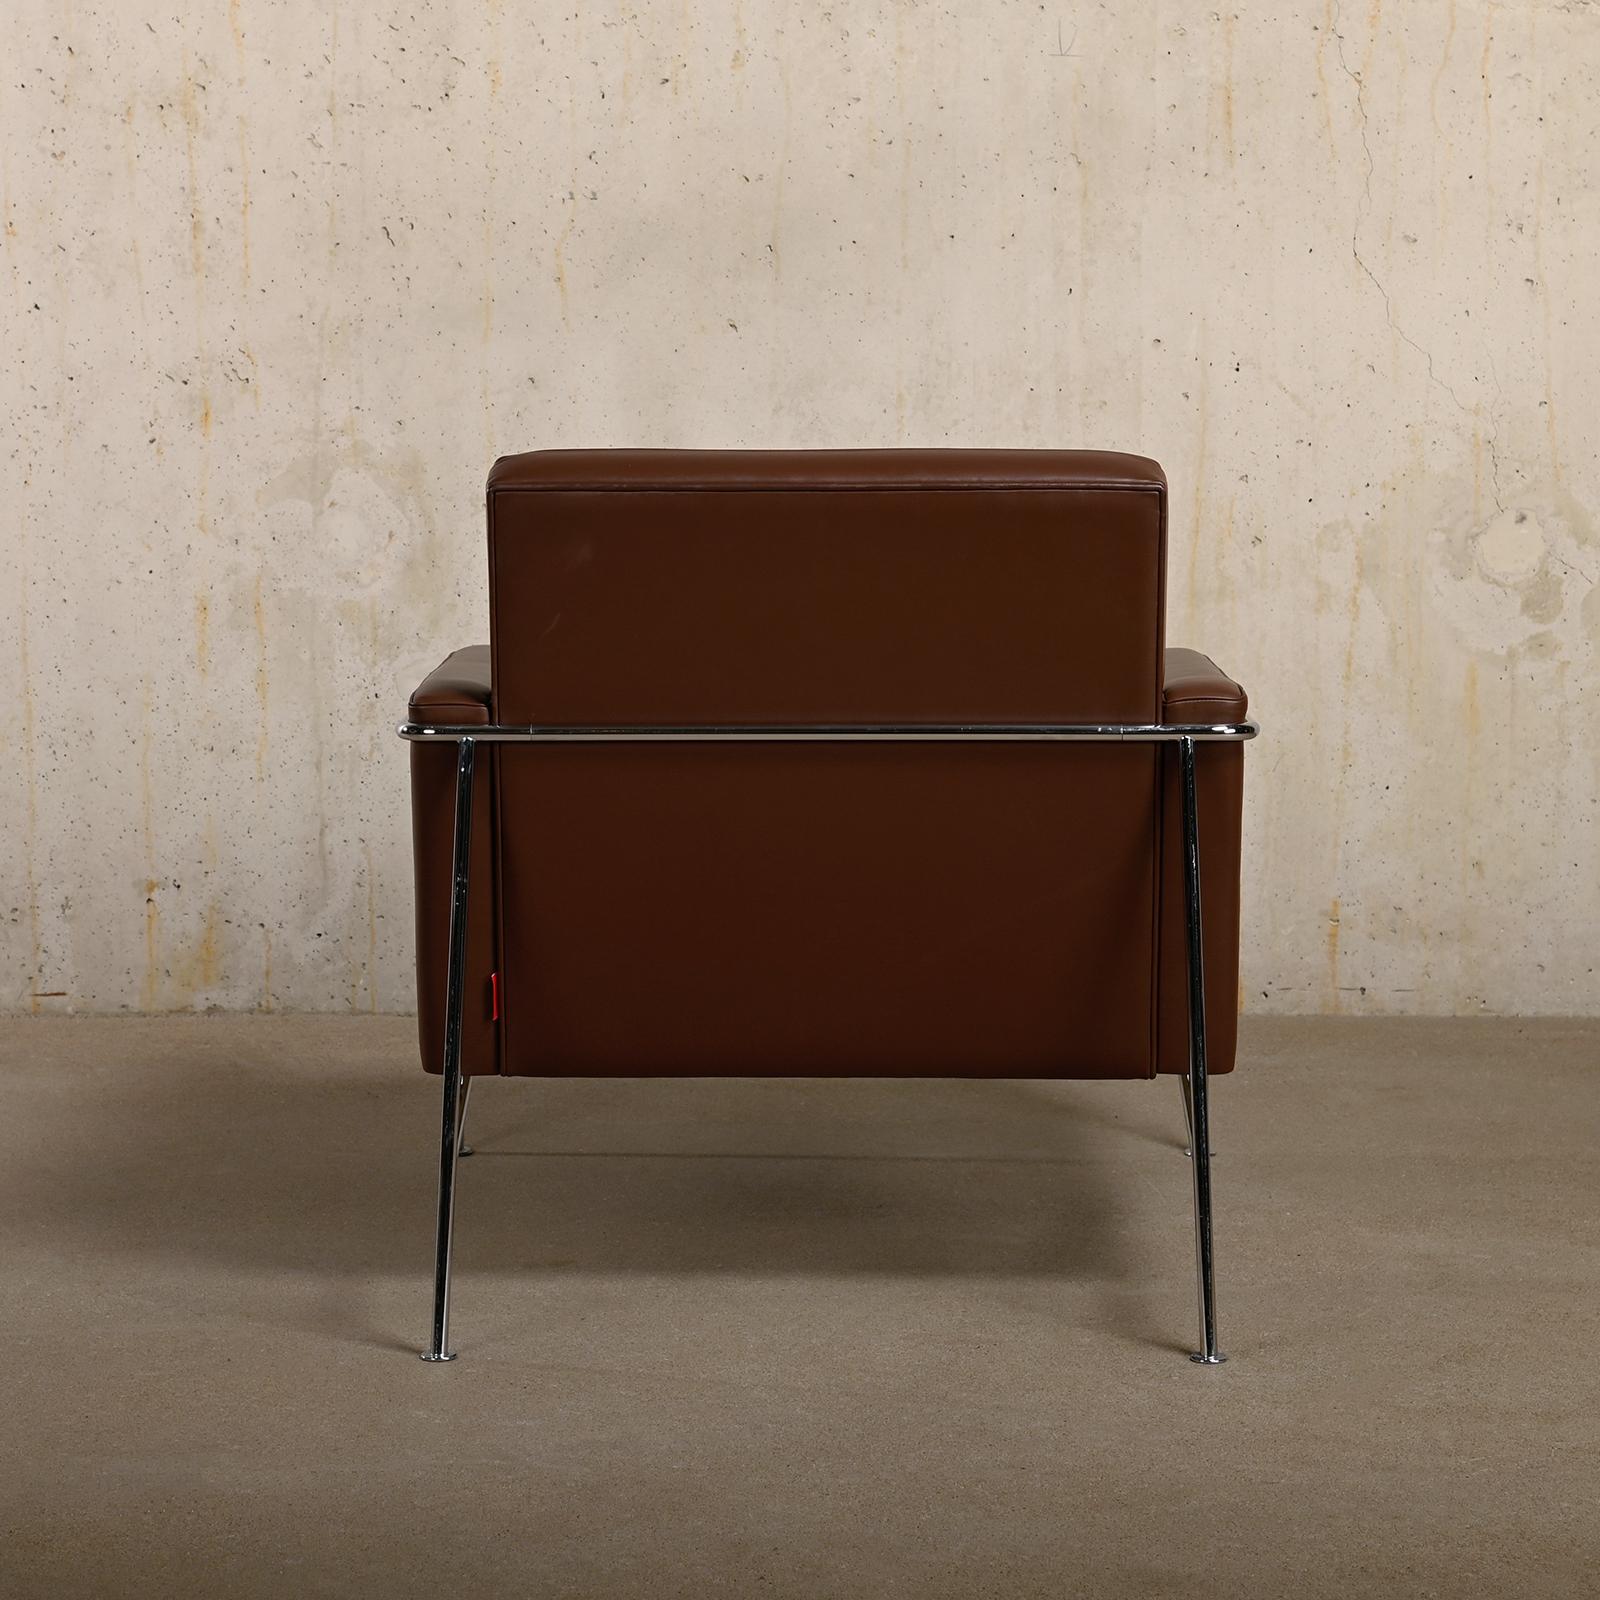 Danish Arne Jacobsen Pair Armchairs 3300 Series in Chestnut leather for Fritz Hansen For Sale